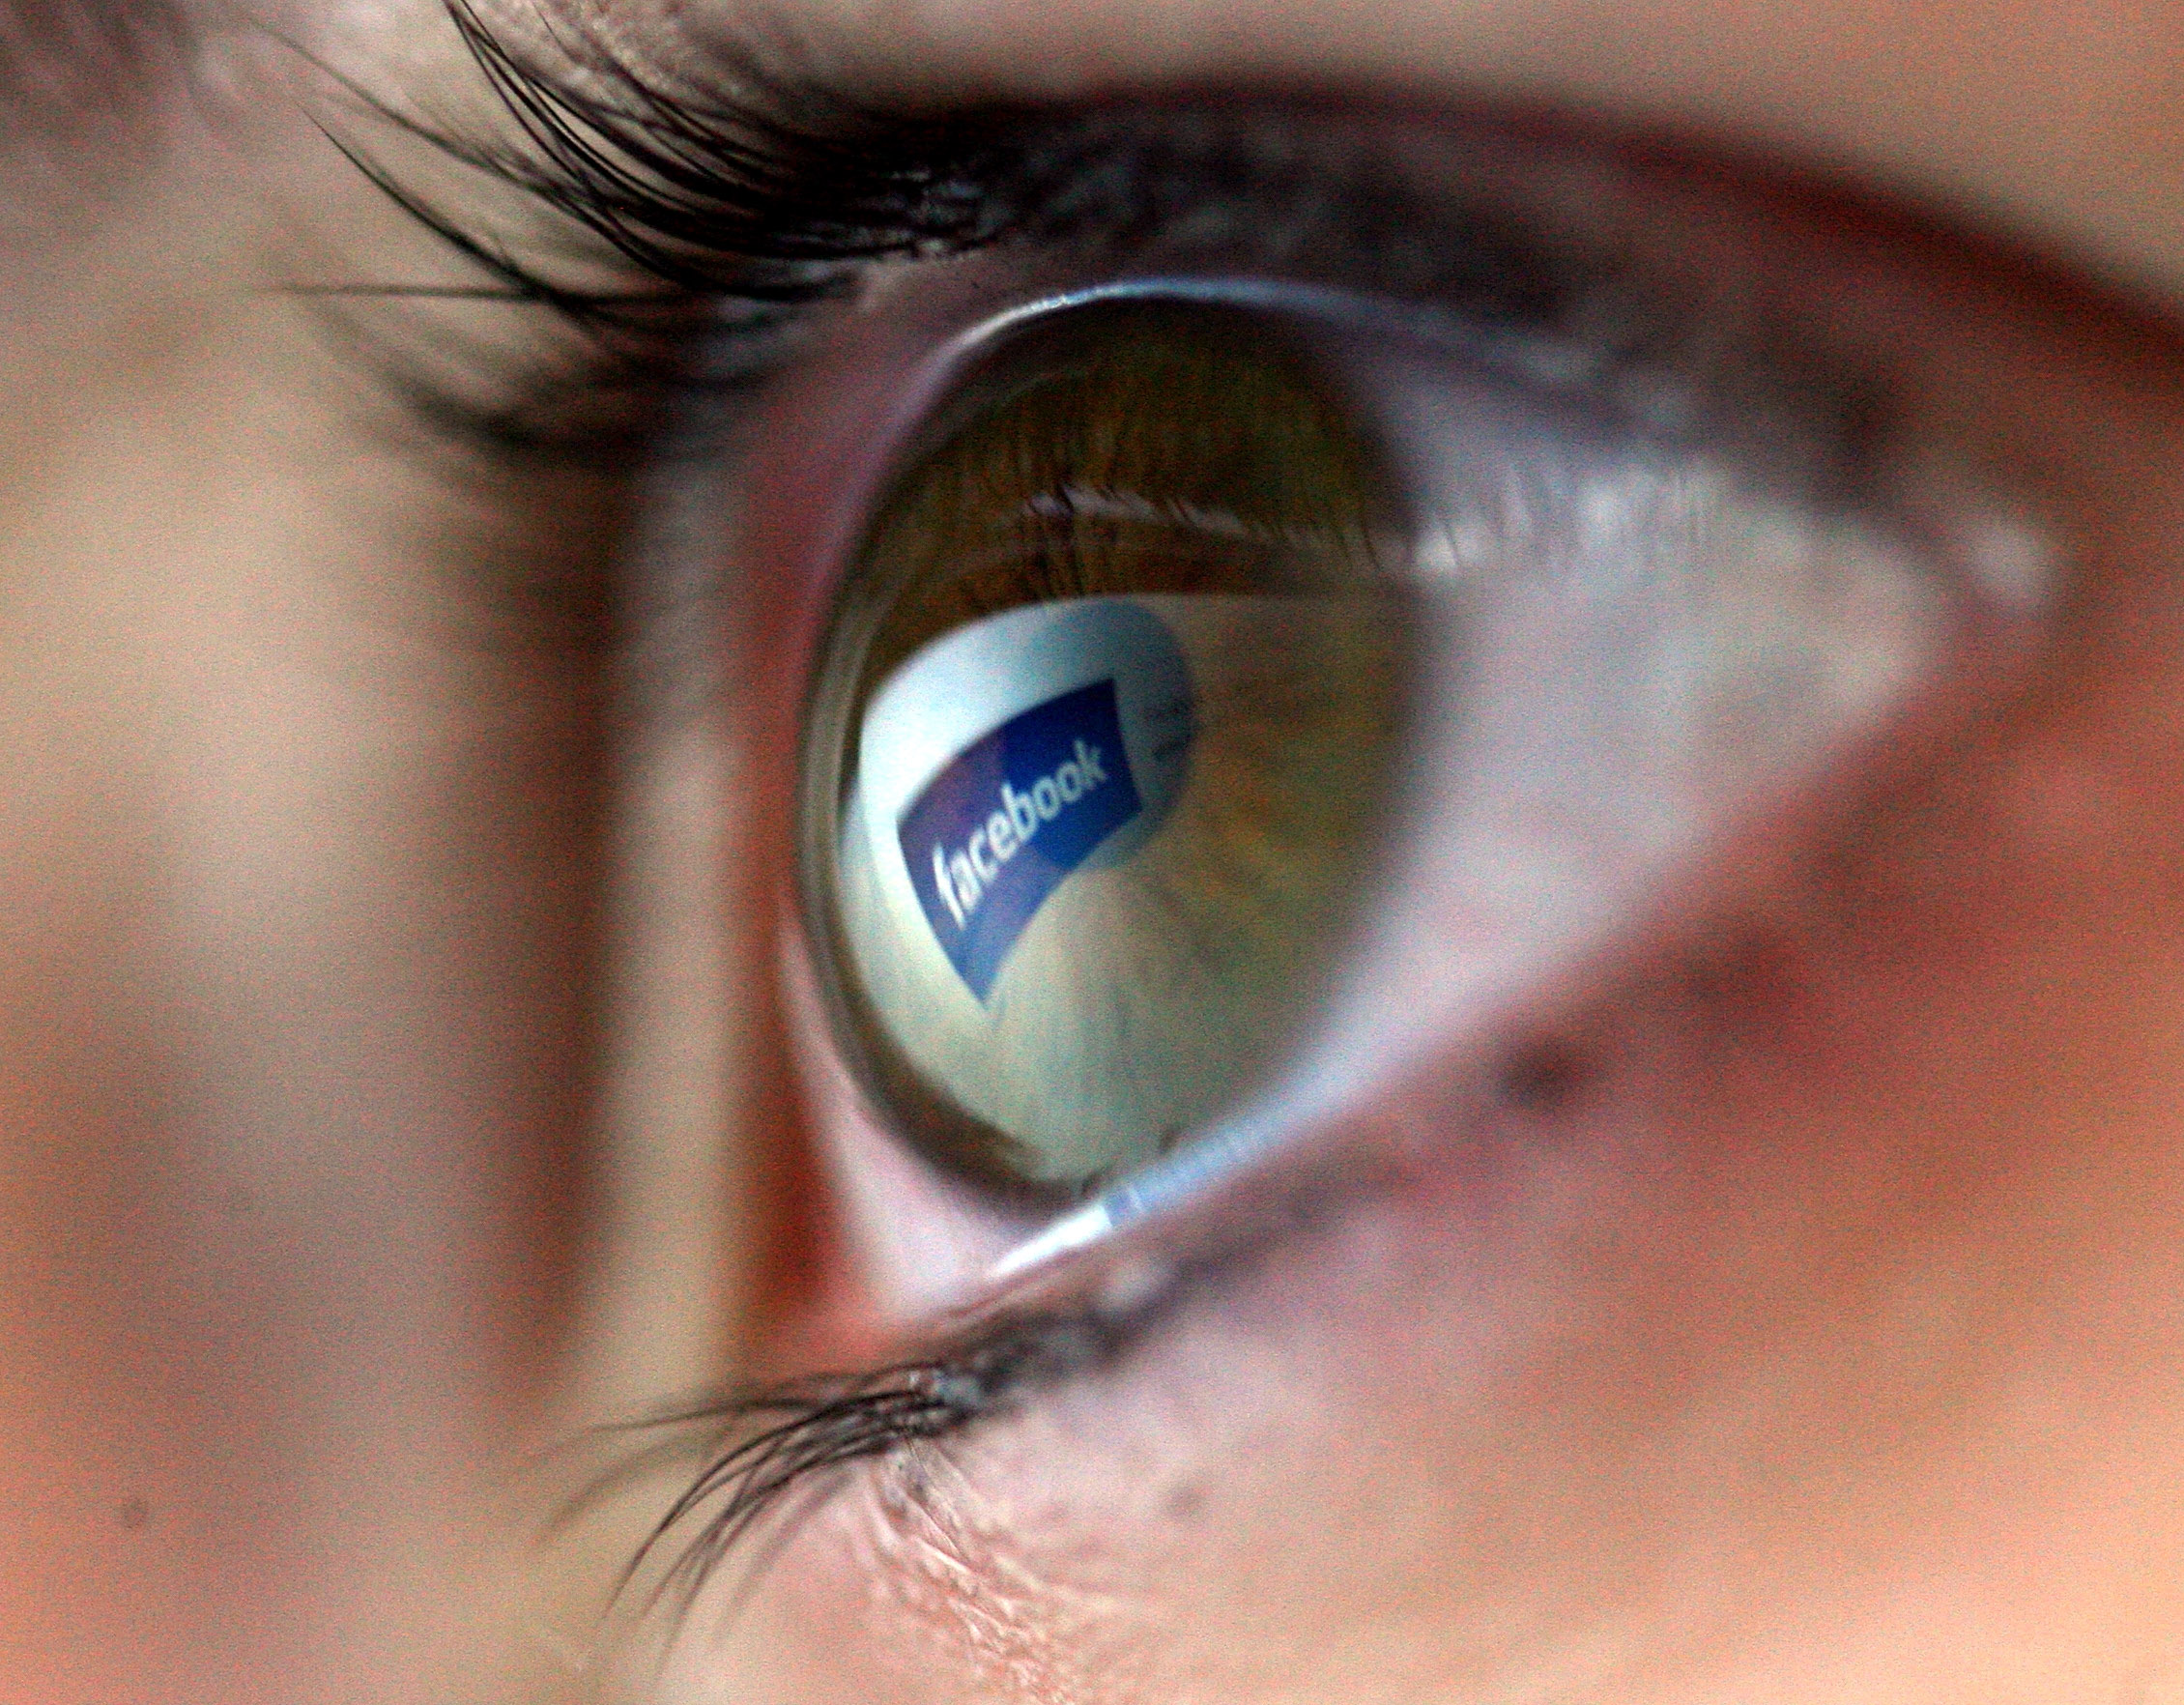 facebook logo in an eyeball